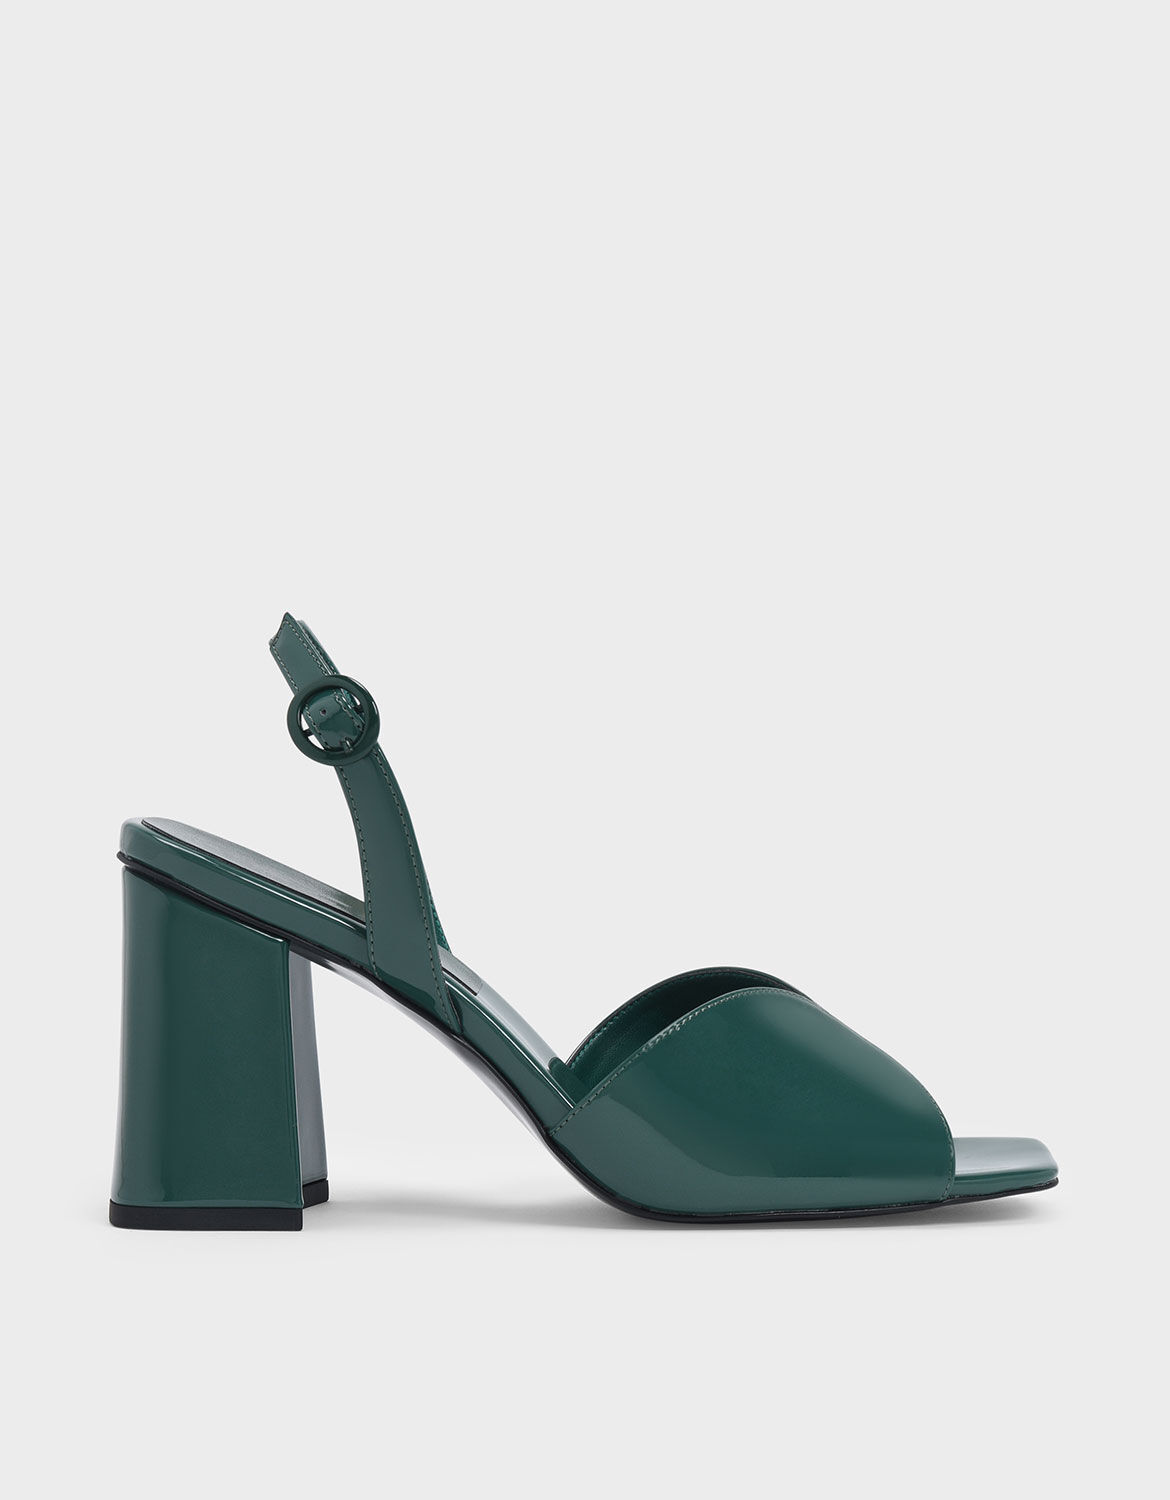 forest green block heels